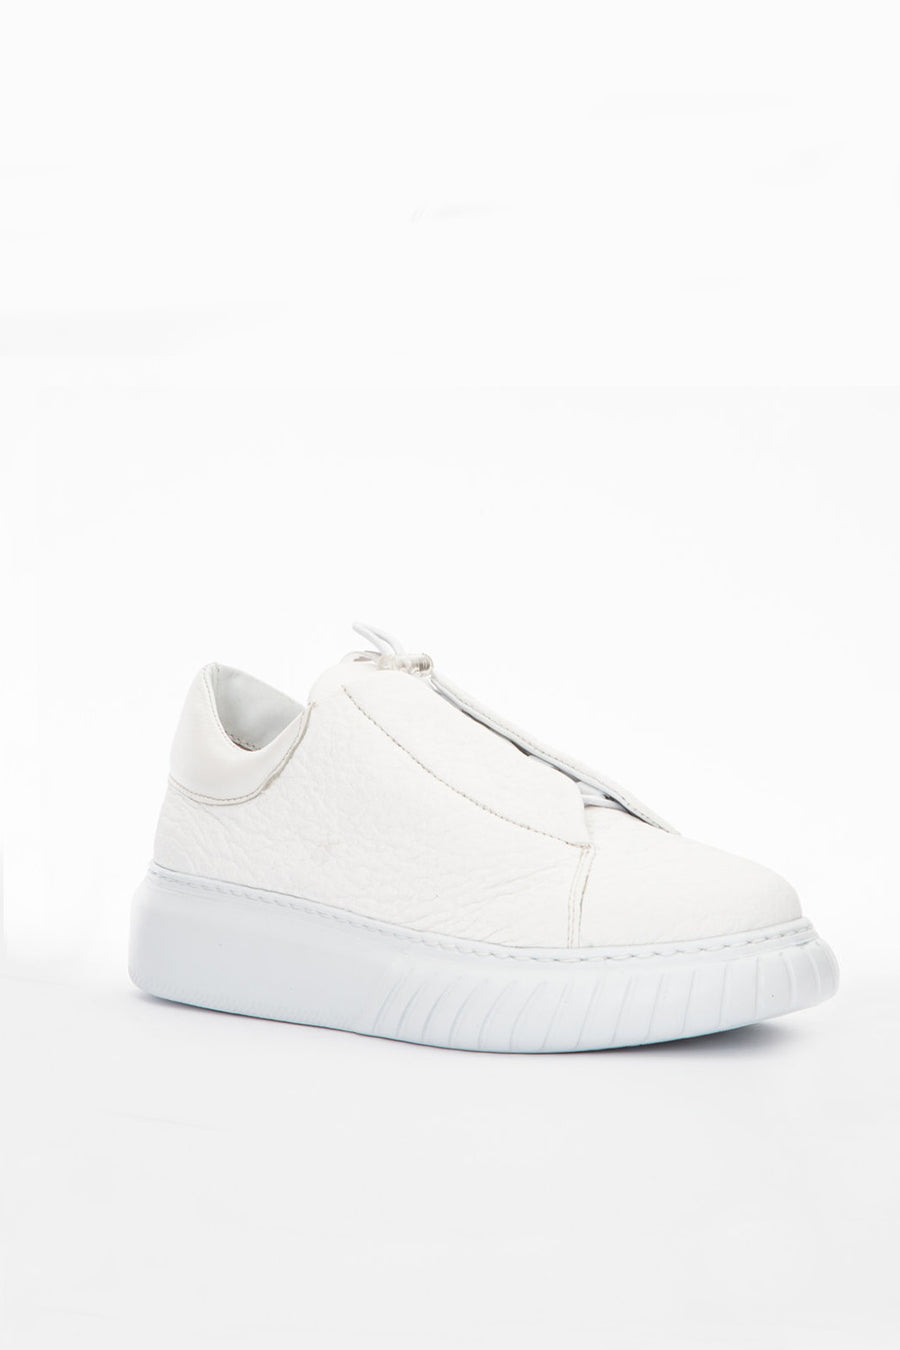 Sneakers Andiafora in pelle color bianco LIBI